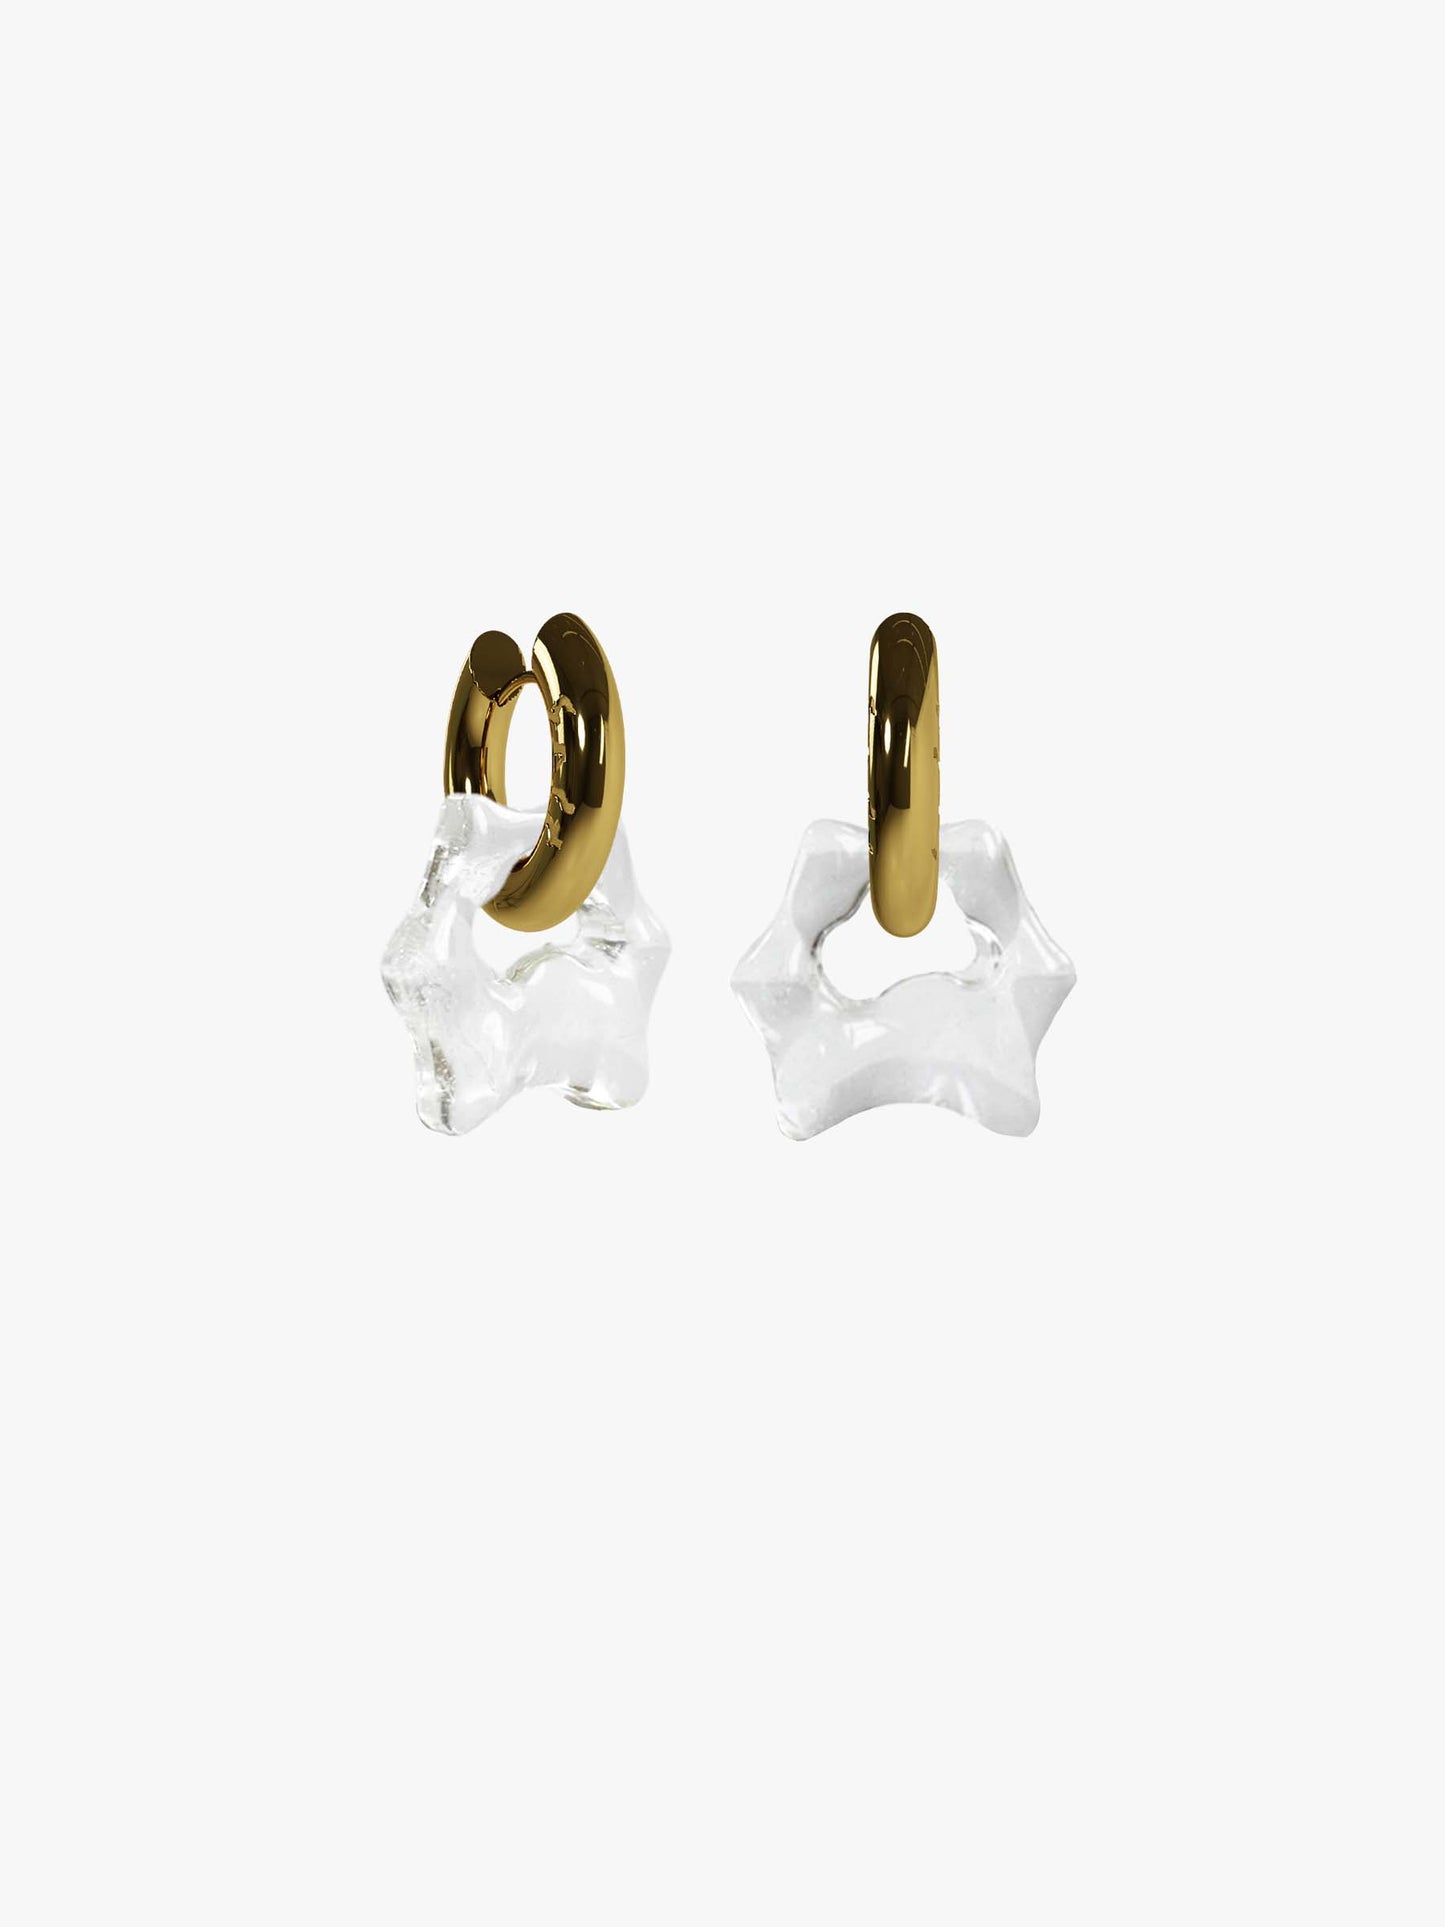 Tab transparent gold earring (pair)